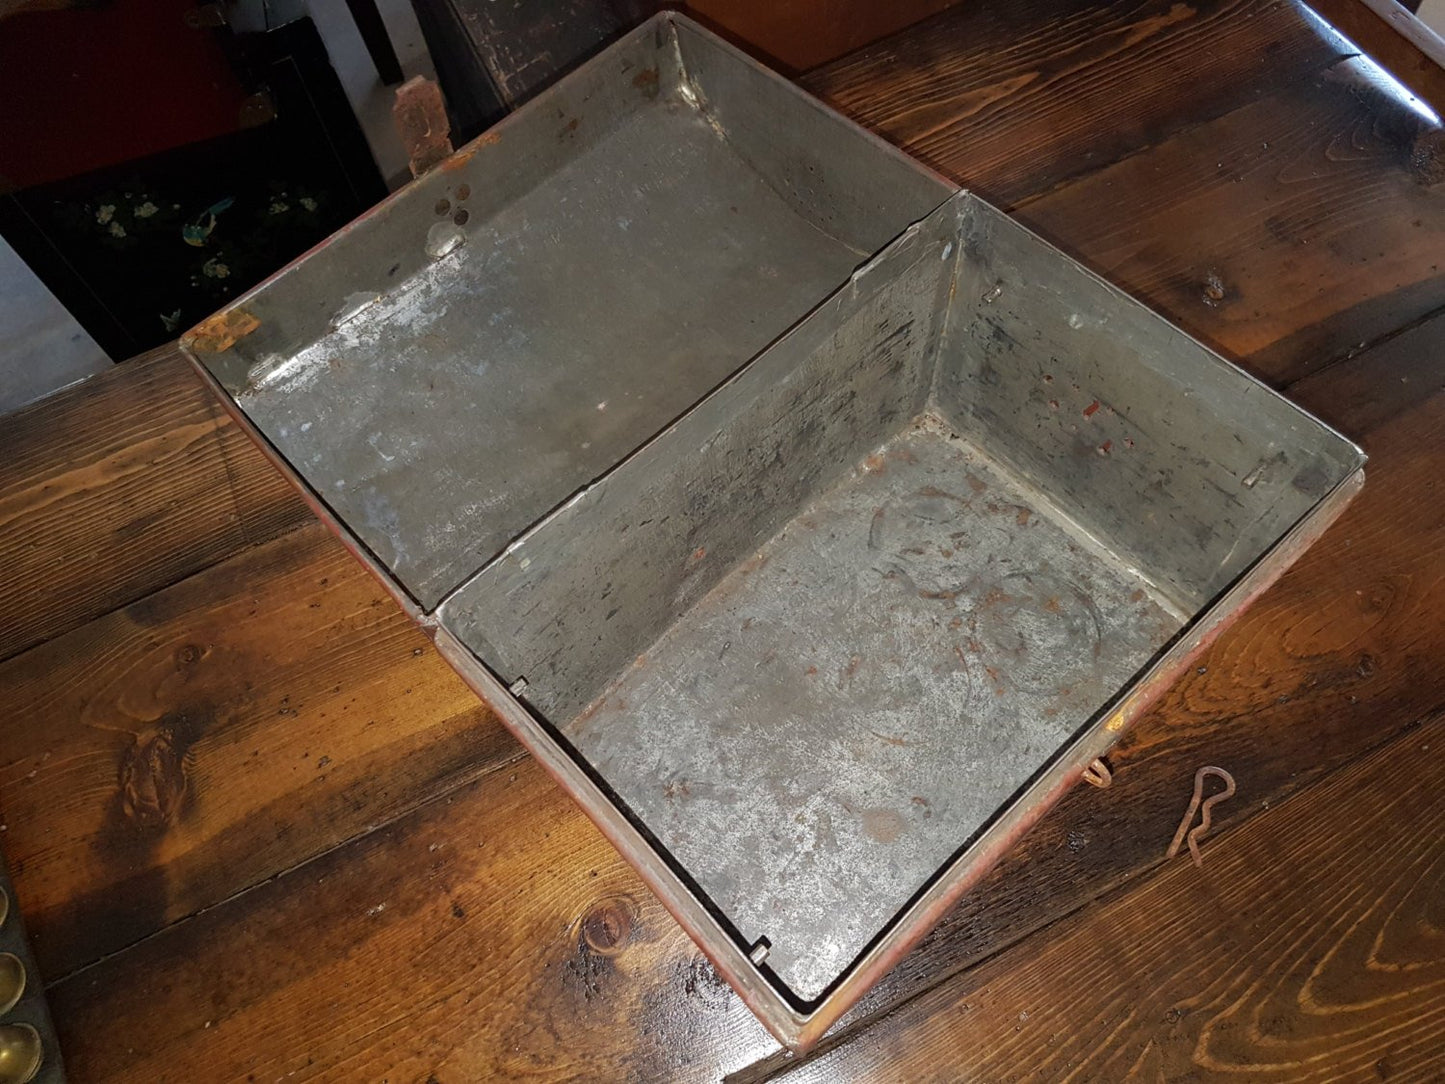 cnr lunch box antique